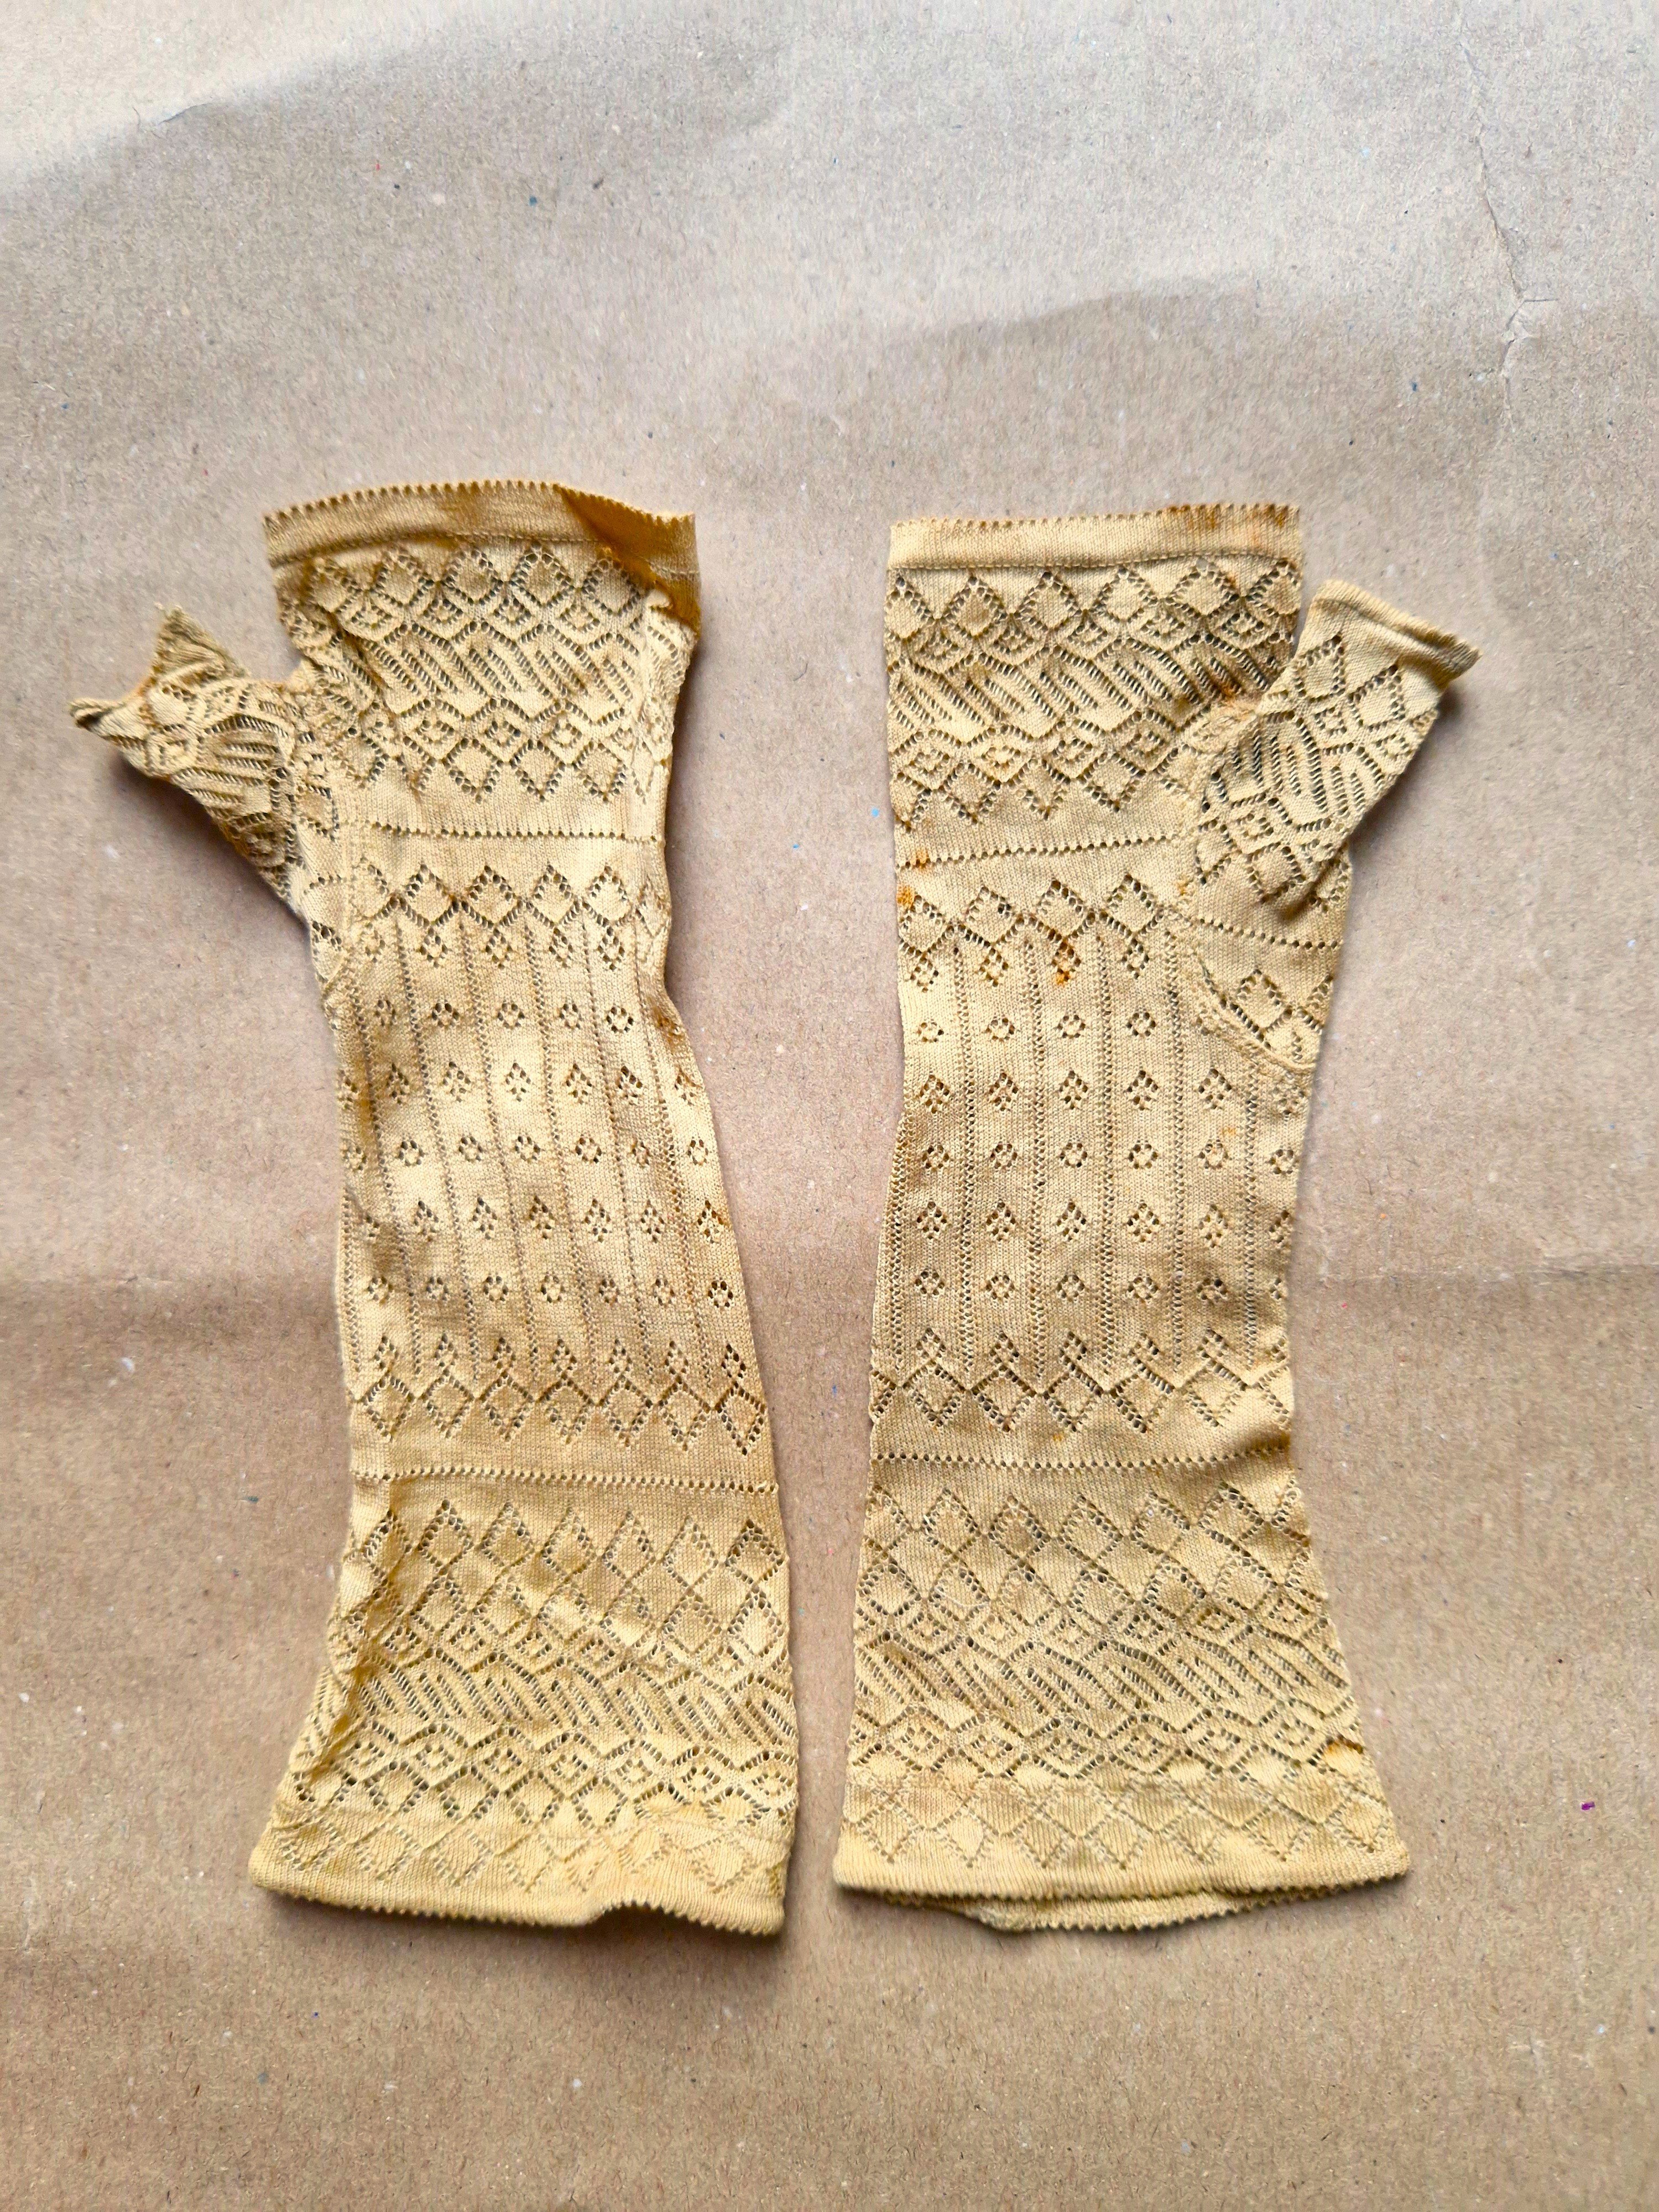 Paar Stulpenhandschuhe aus cremefarbener Spitze, 2. Hälfte 19. Jh. (?) (Schloß Wernigerode GmbH RR-R)